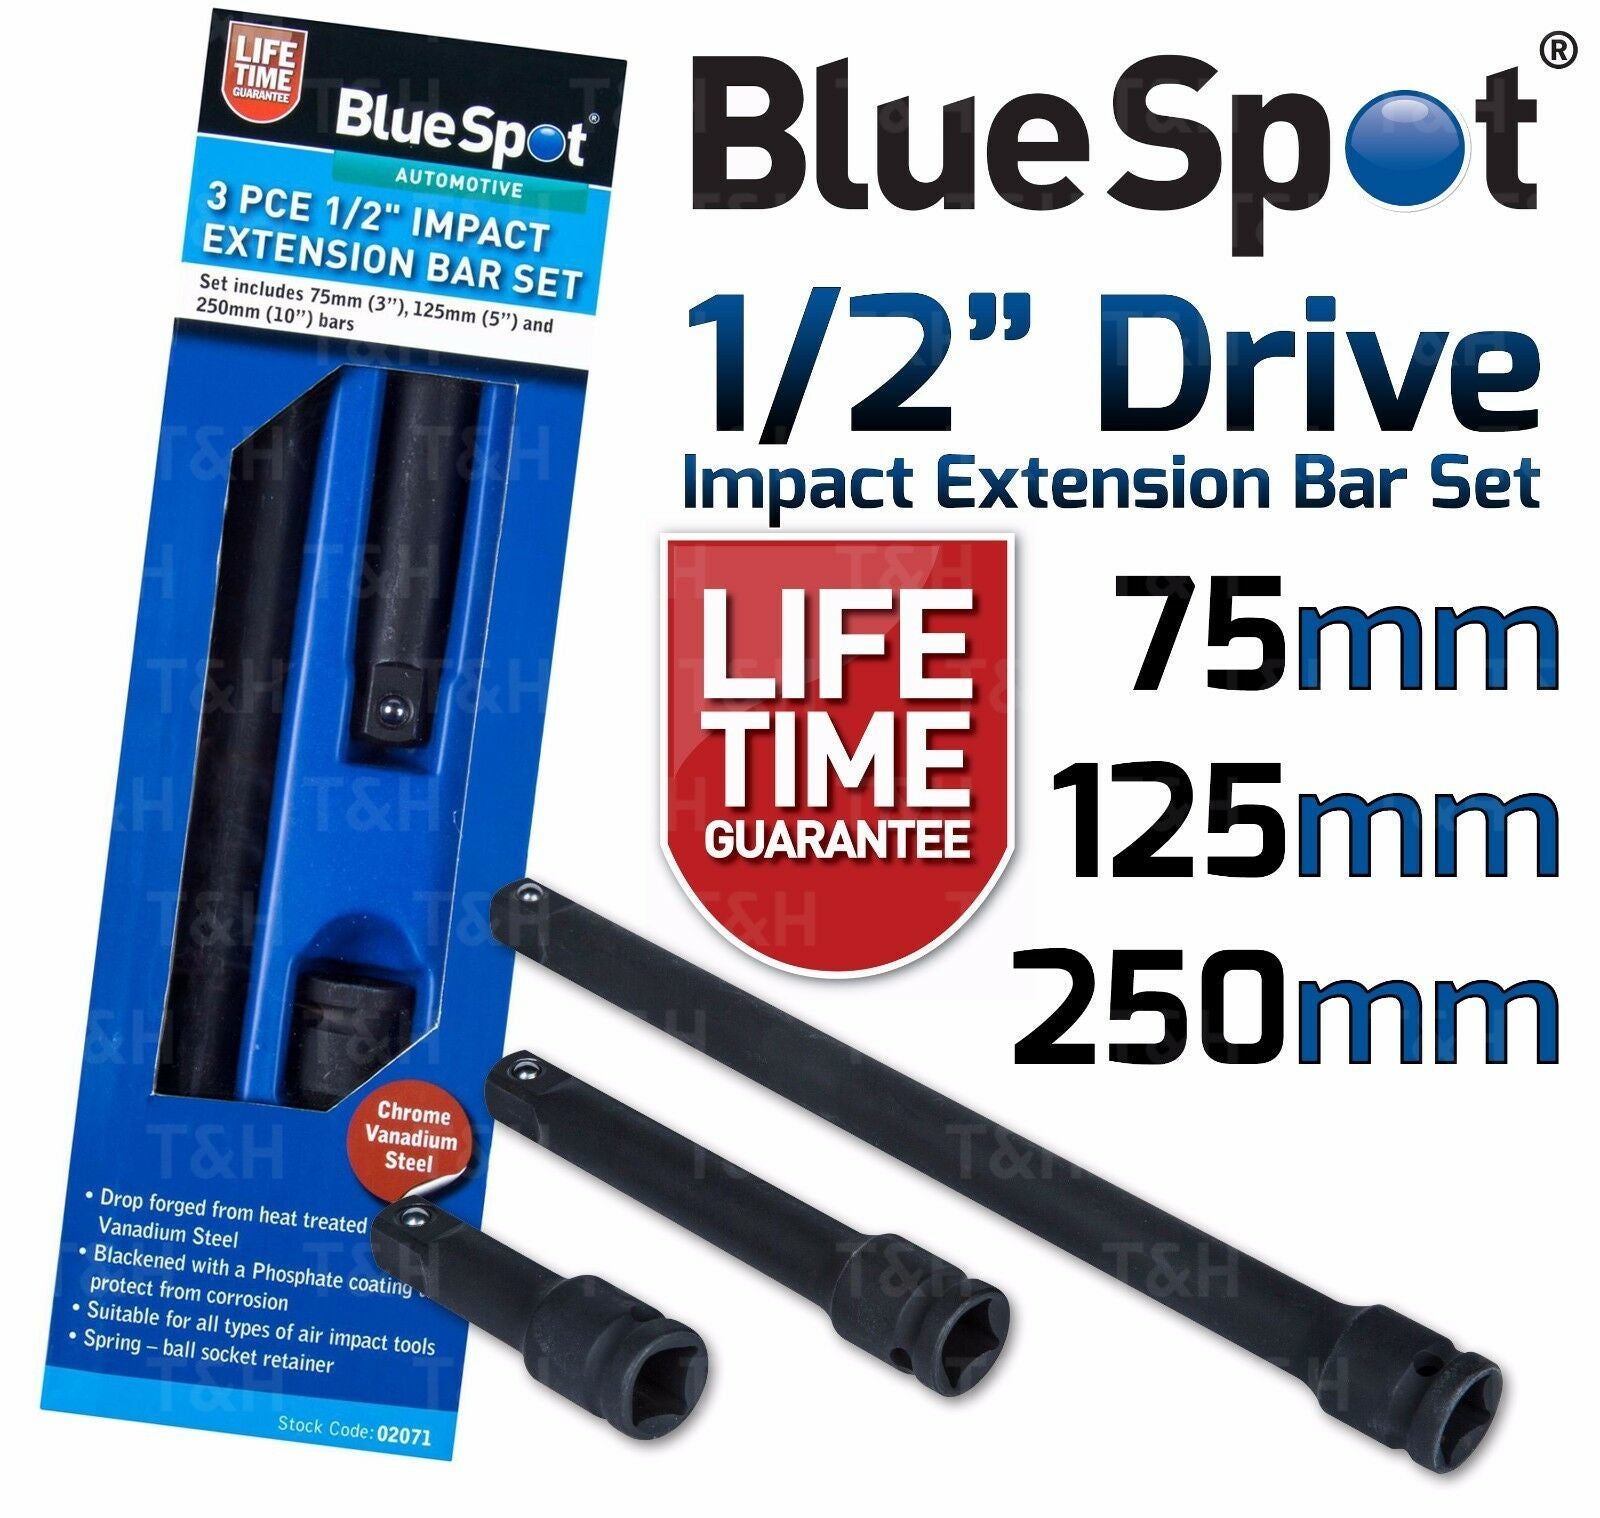 BLUESPOT 3PCS 1/2" DRIVE IMPACT EXTENSION BAR SET